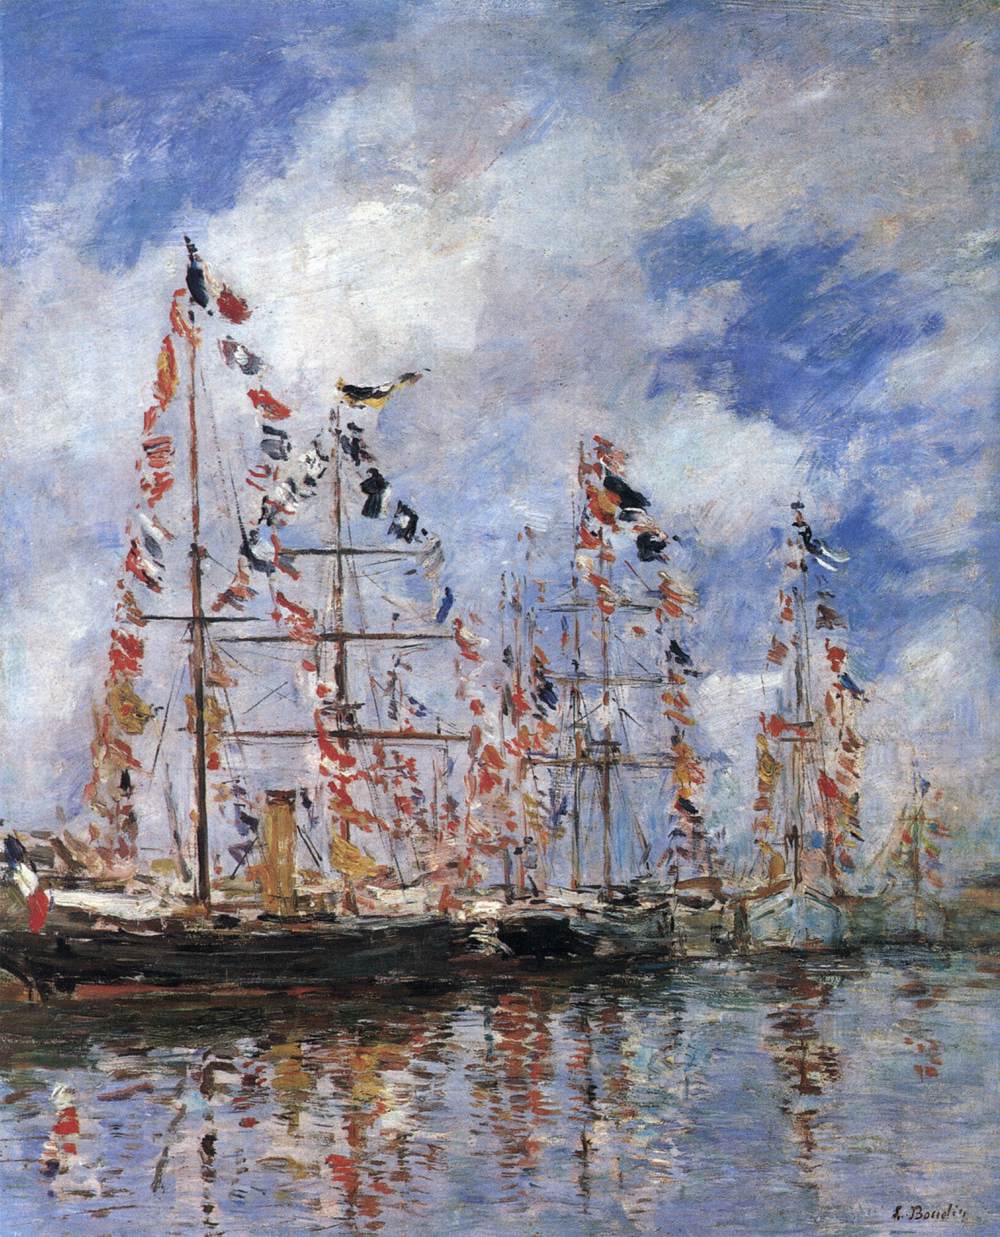 Deauville'de navigasyon gemileri